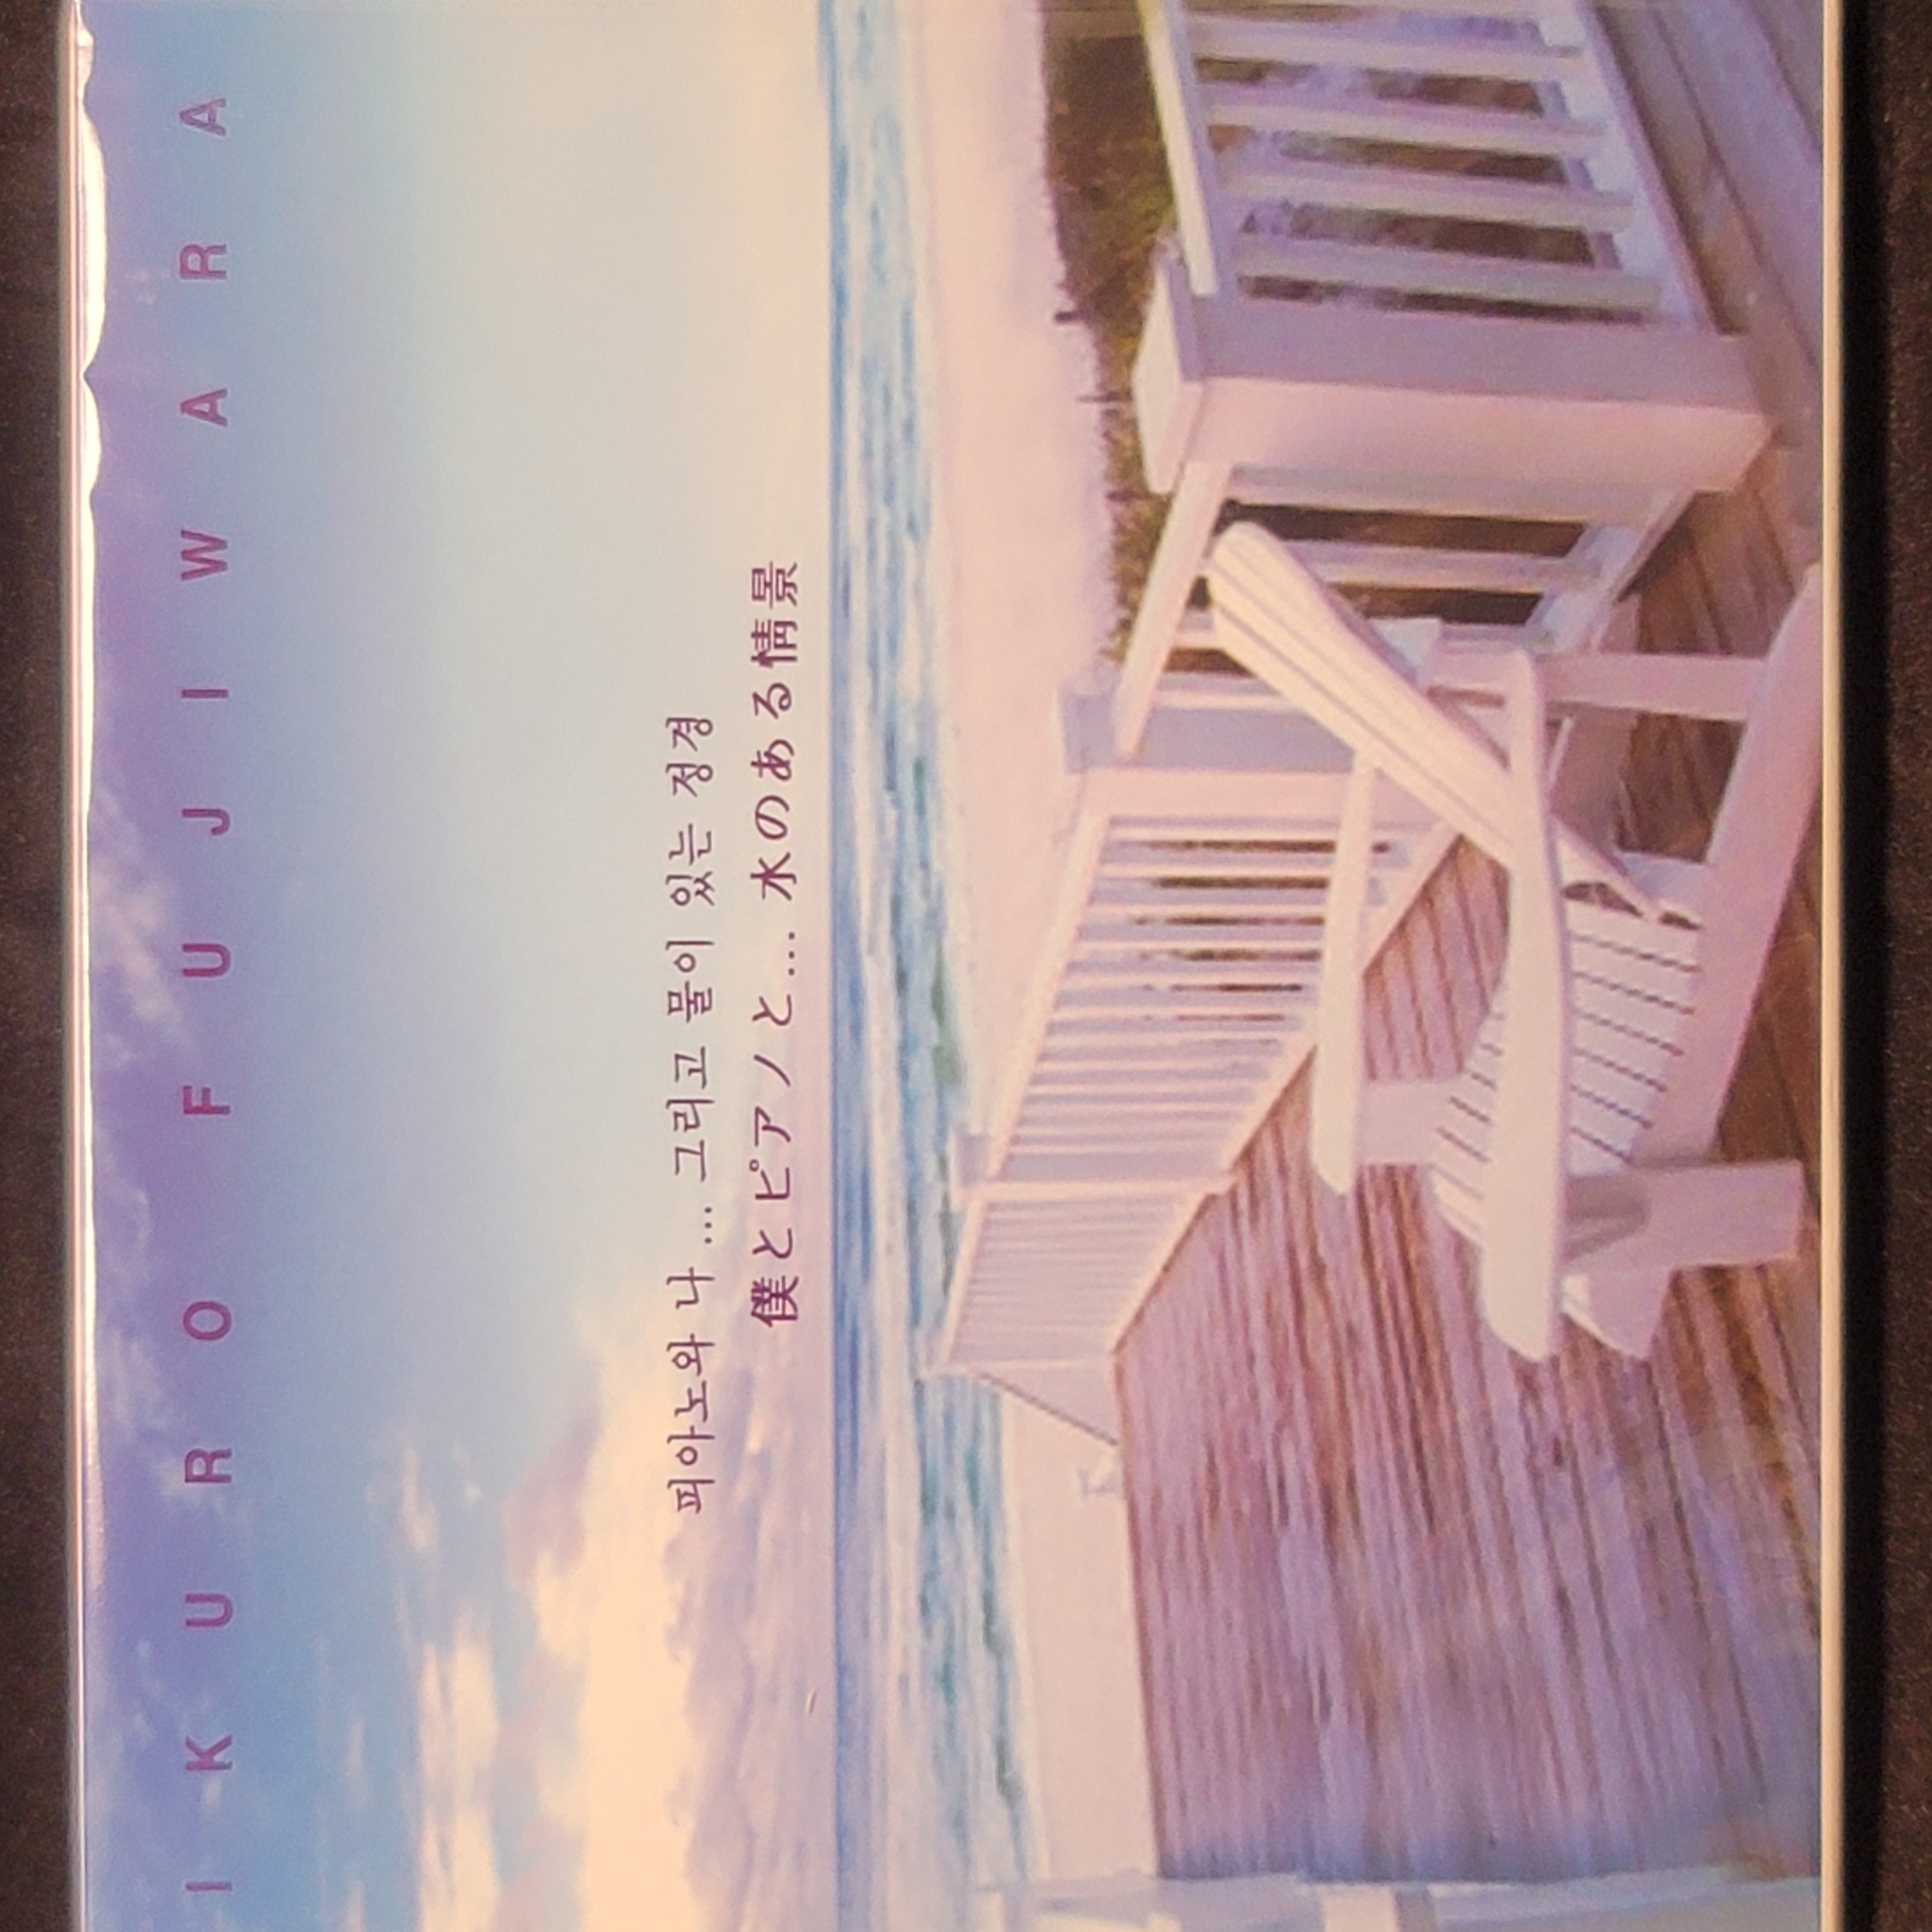 IKURO FIJIWARA - 피아노와 나 그리고 물이 있는 정경